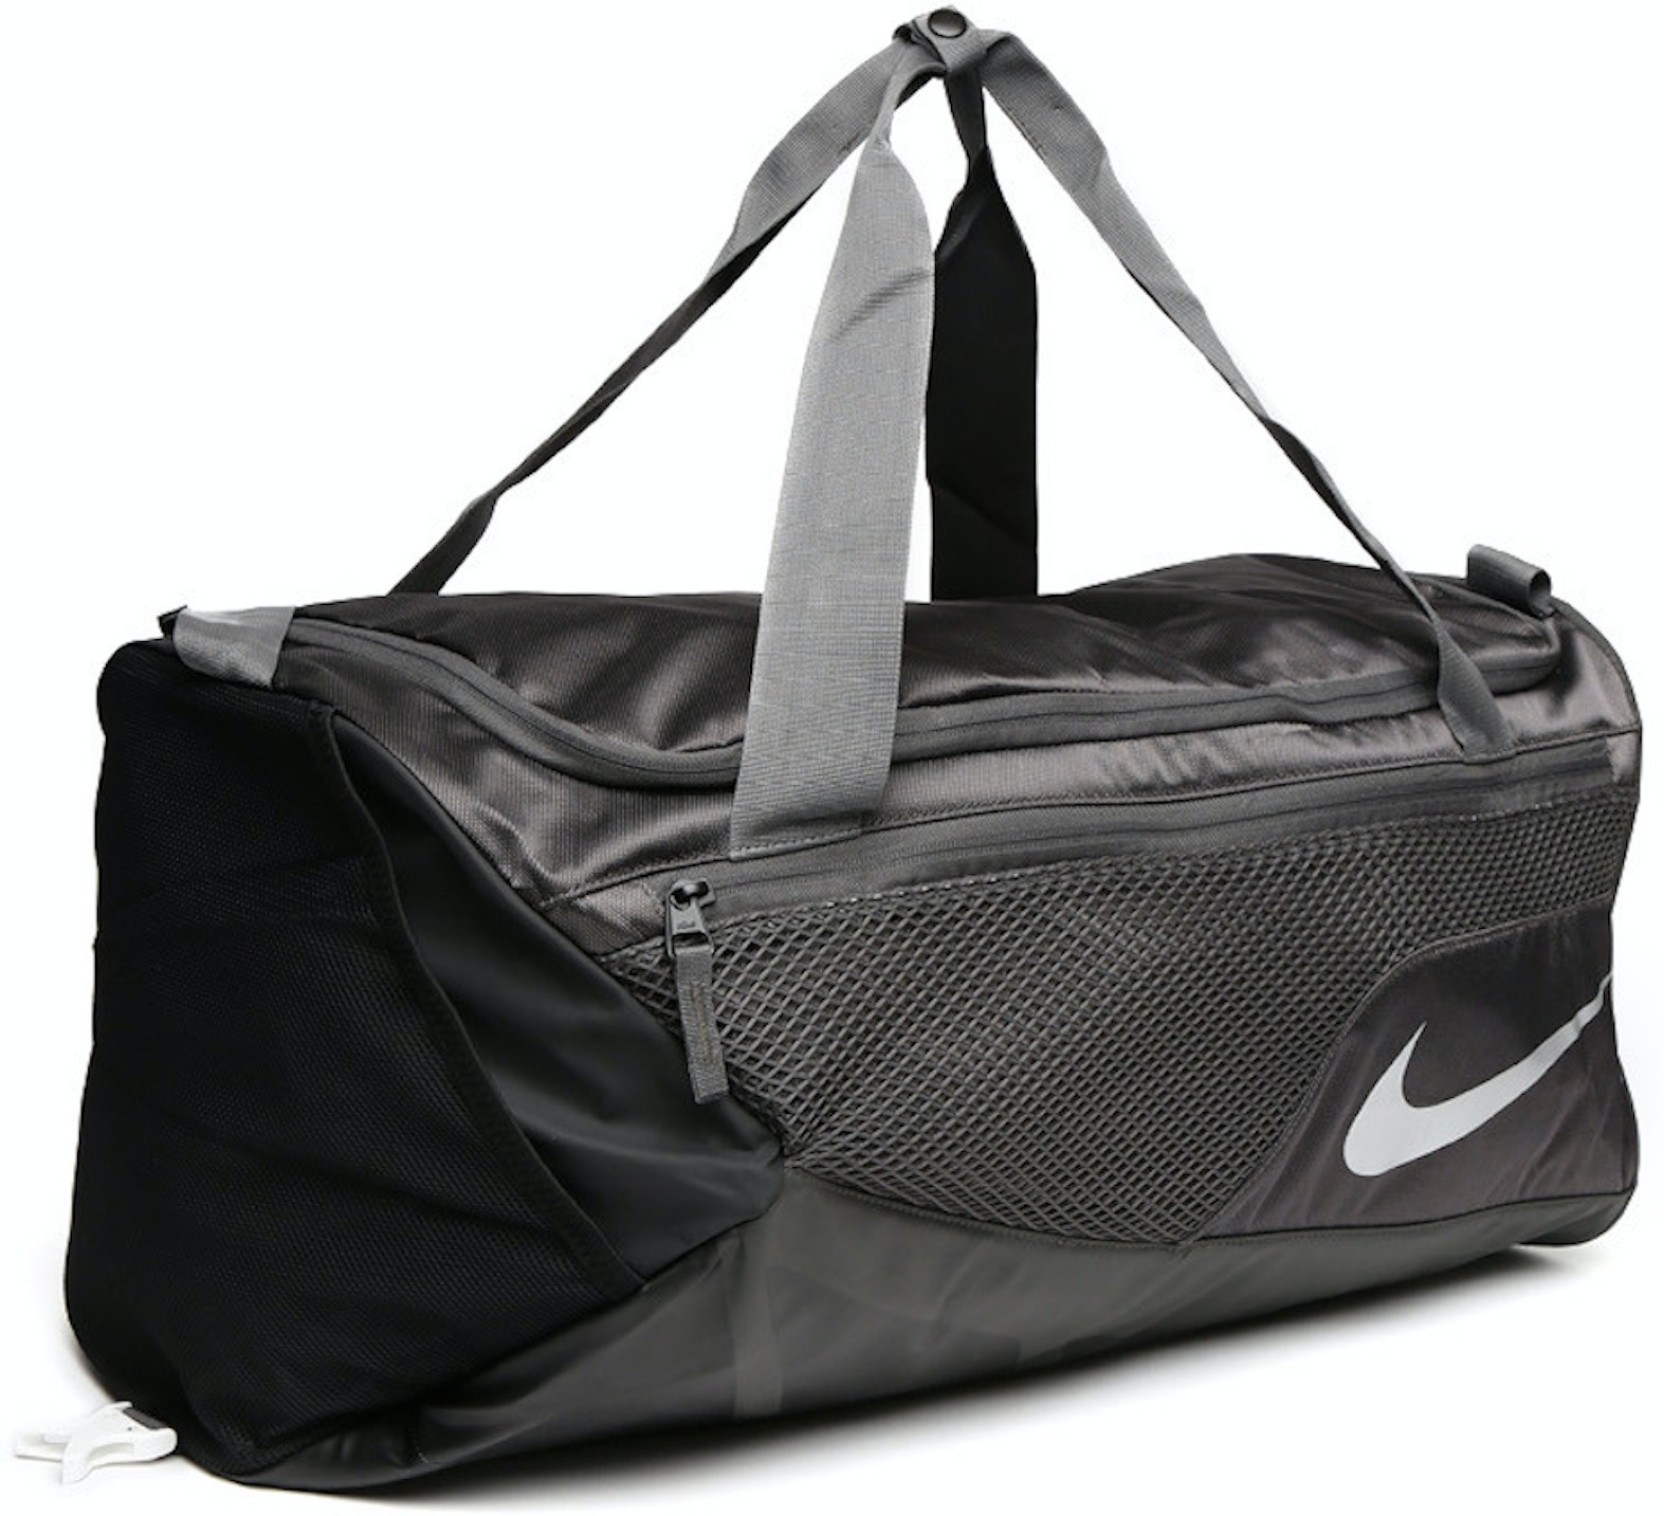 Nike Vapor Max Air 2.0 (Expandable) Travel Duffel Bag Black, Grey ...